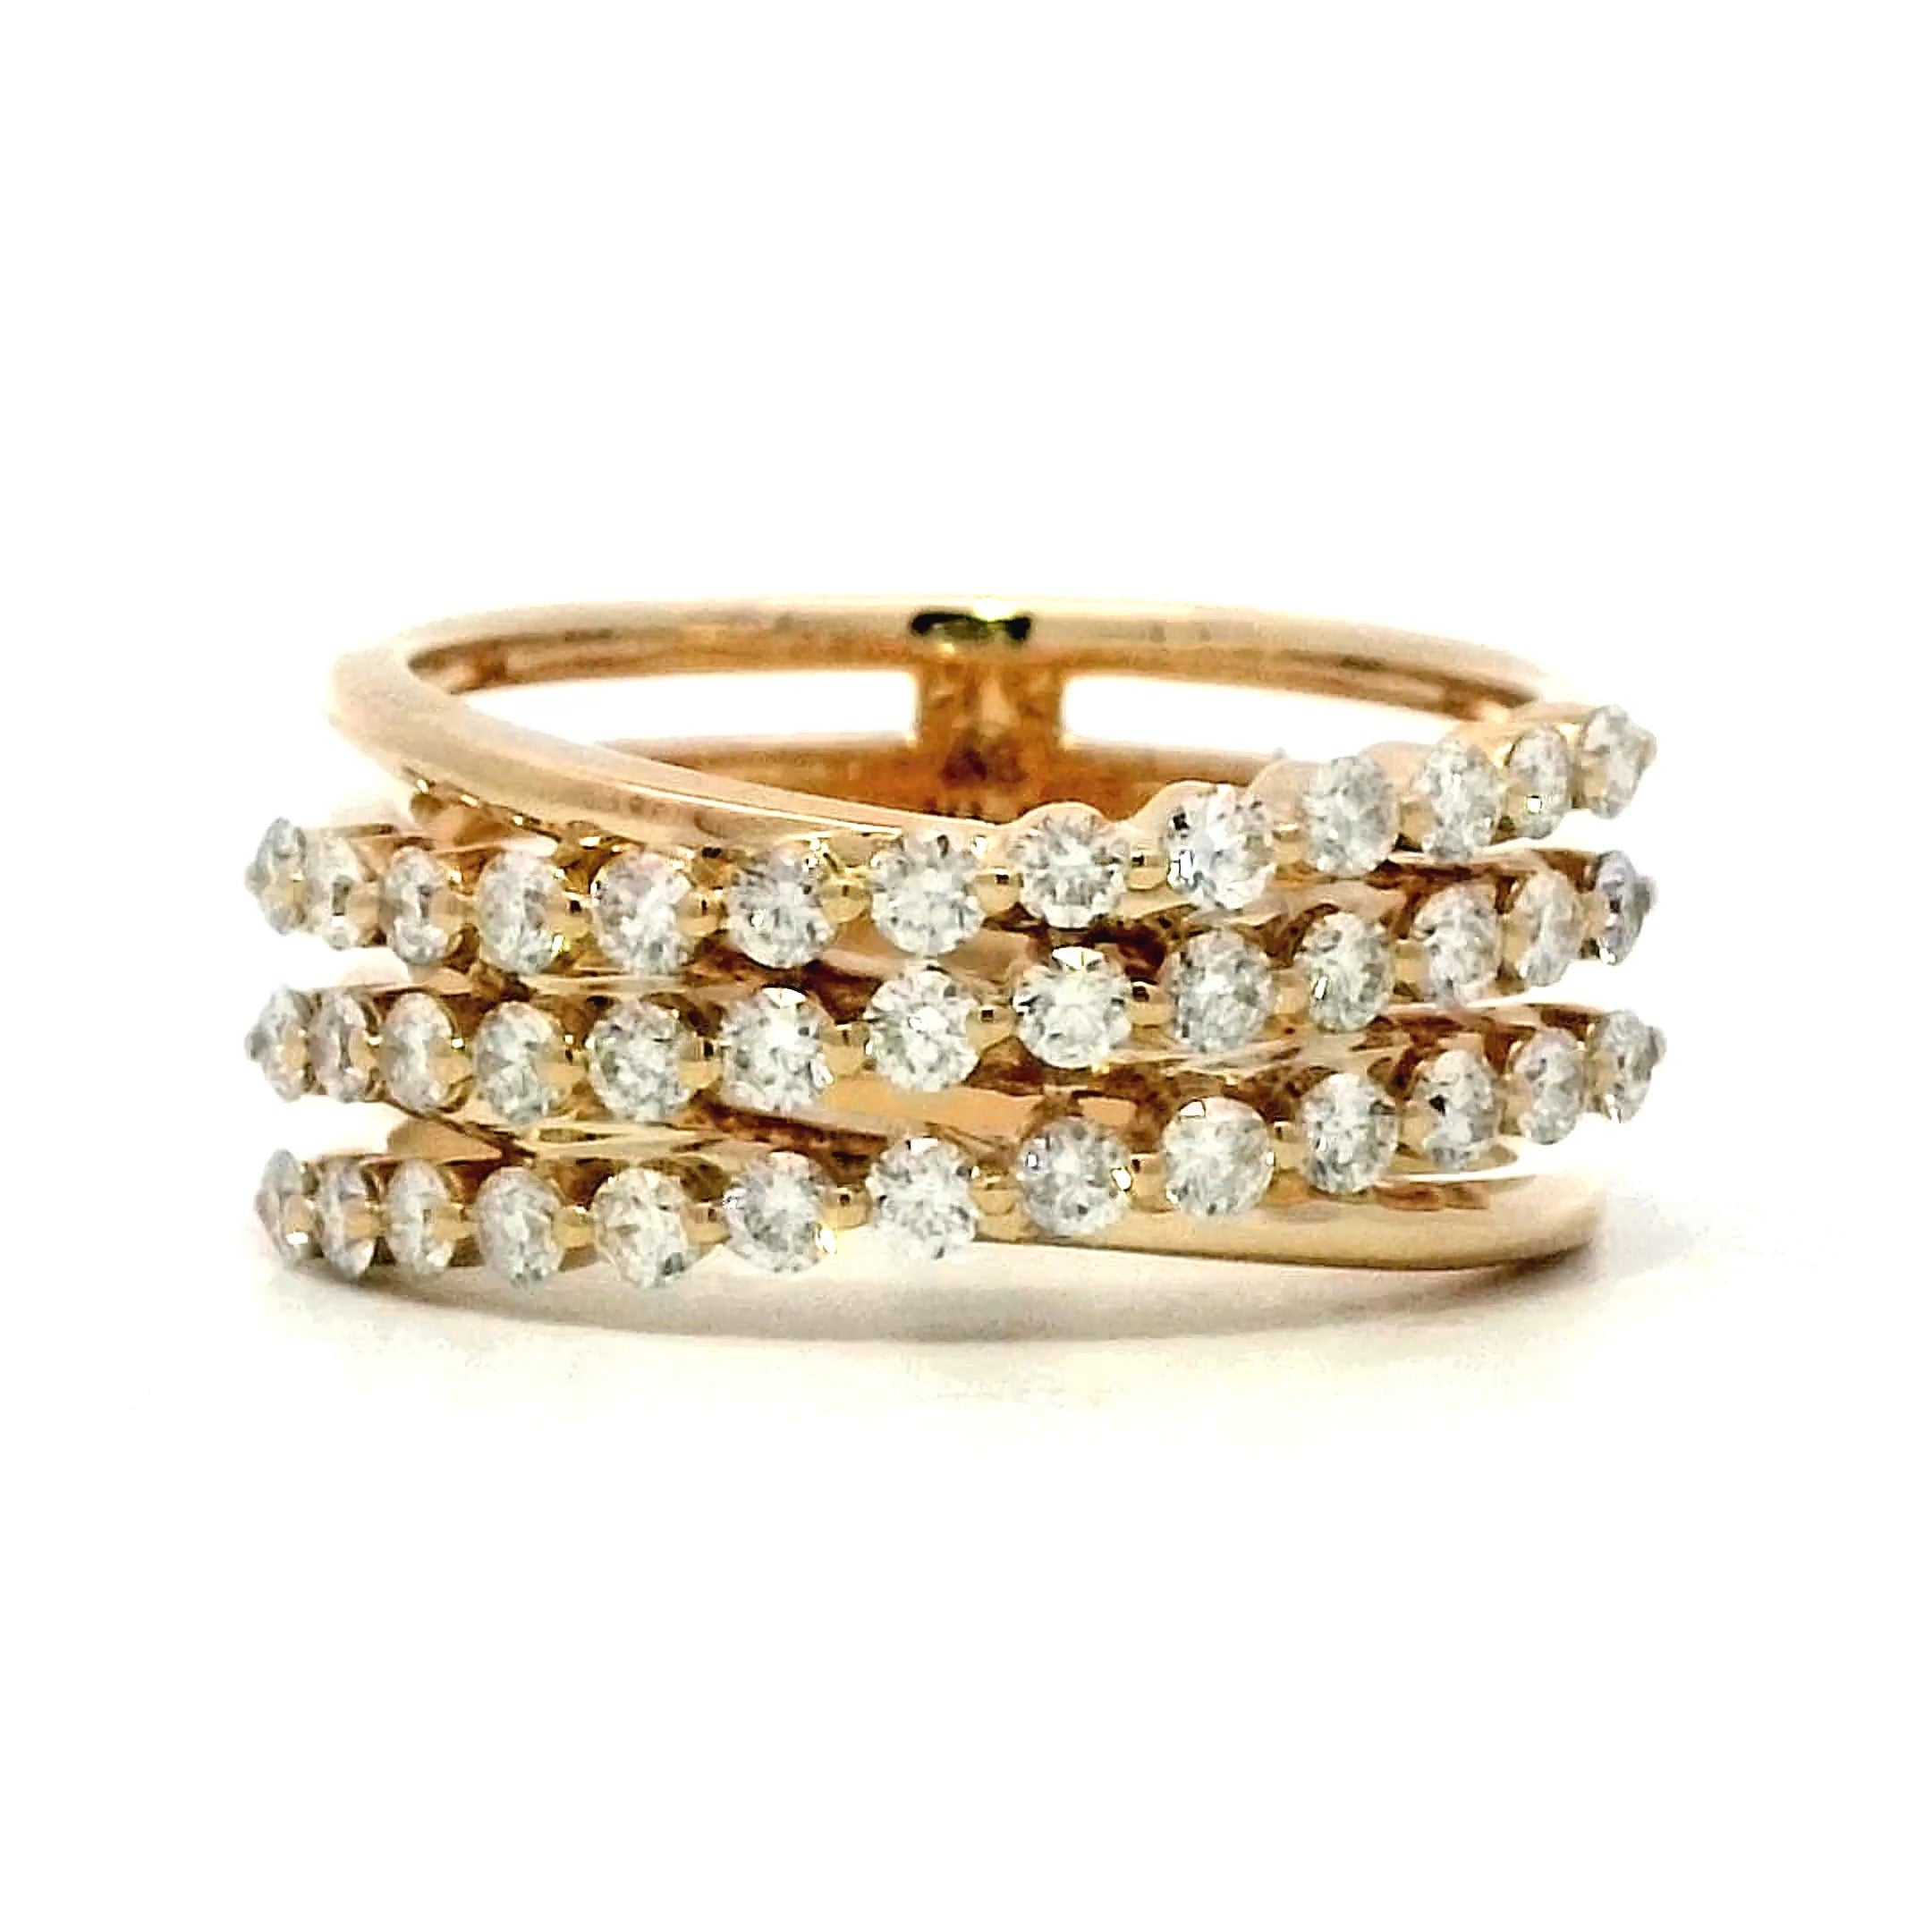 22 Karat Gold Finger Ring | Gold finger rings, Wedding ring design gold,  Gold jewelry simple necklace